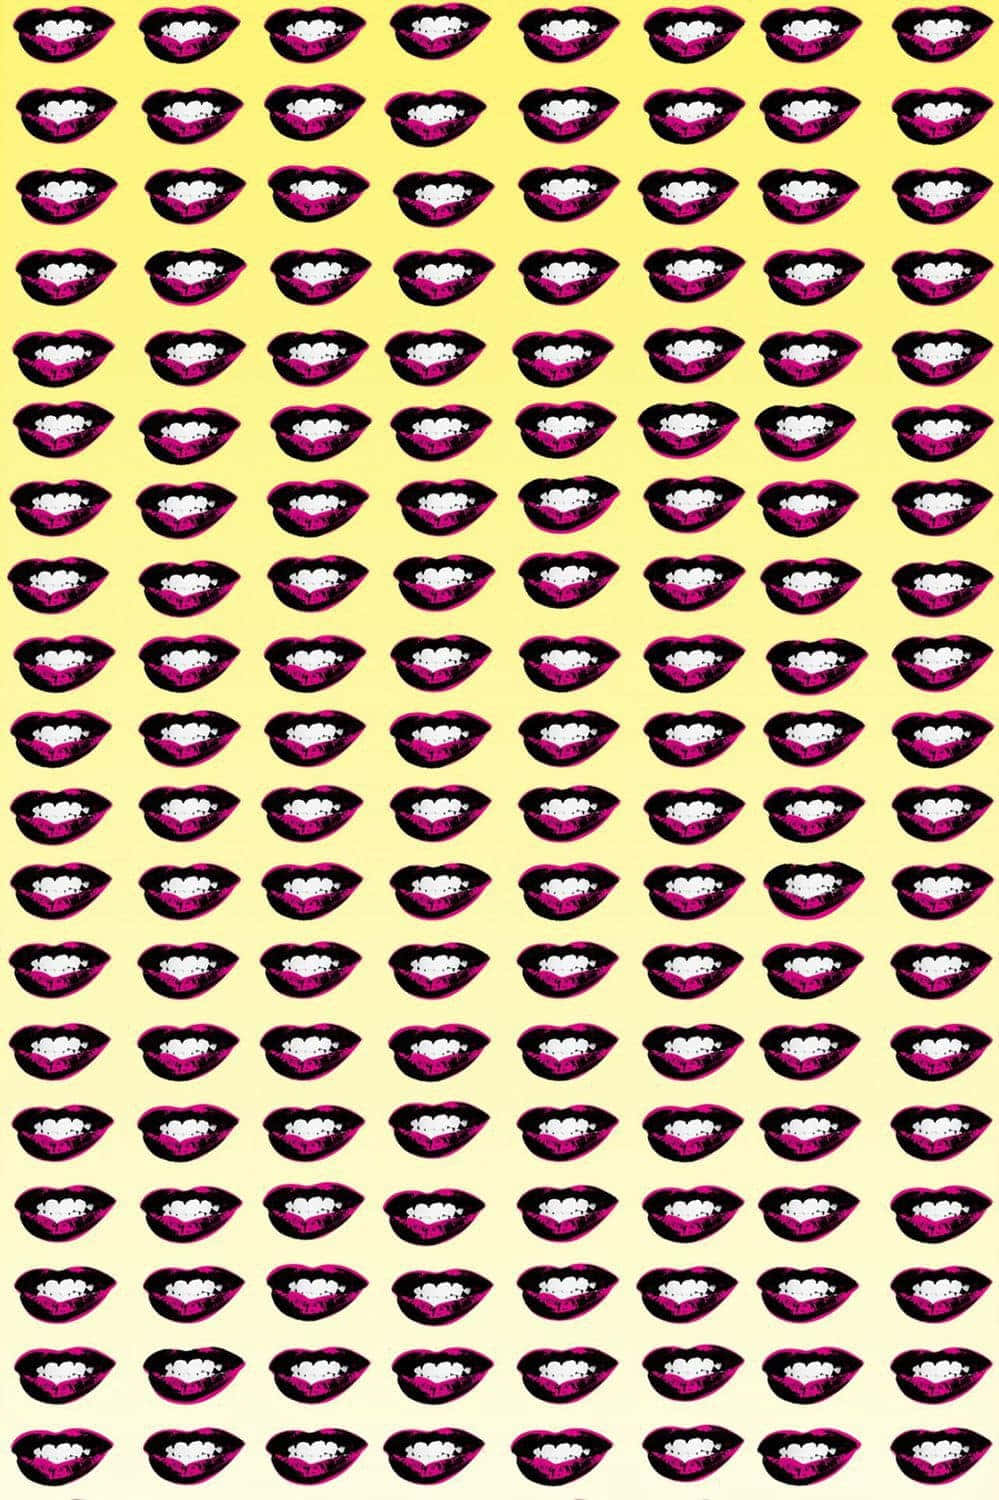 Andy Warhol Lips Wallpaper